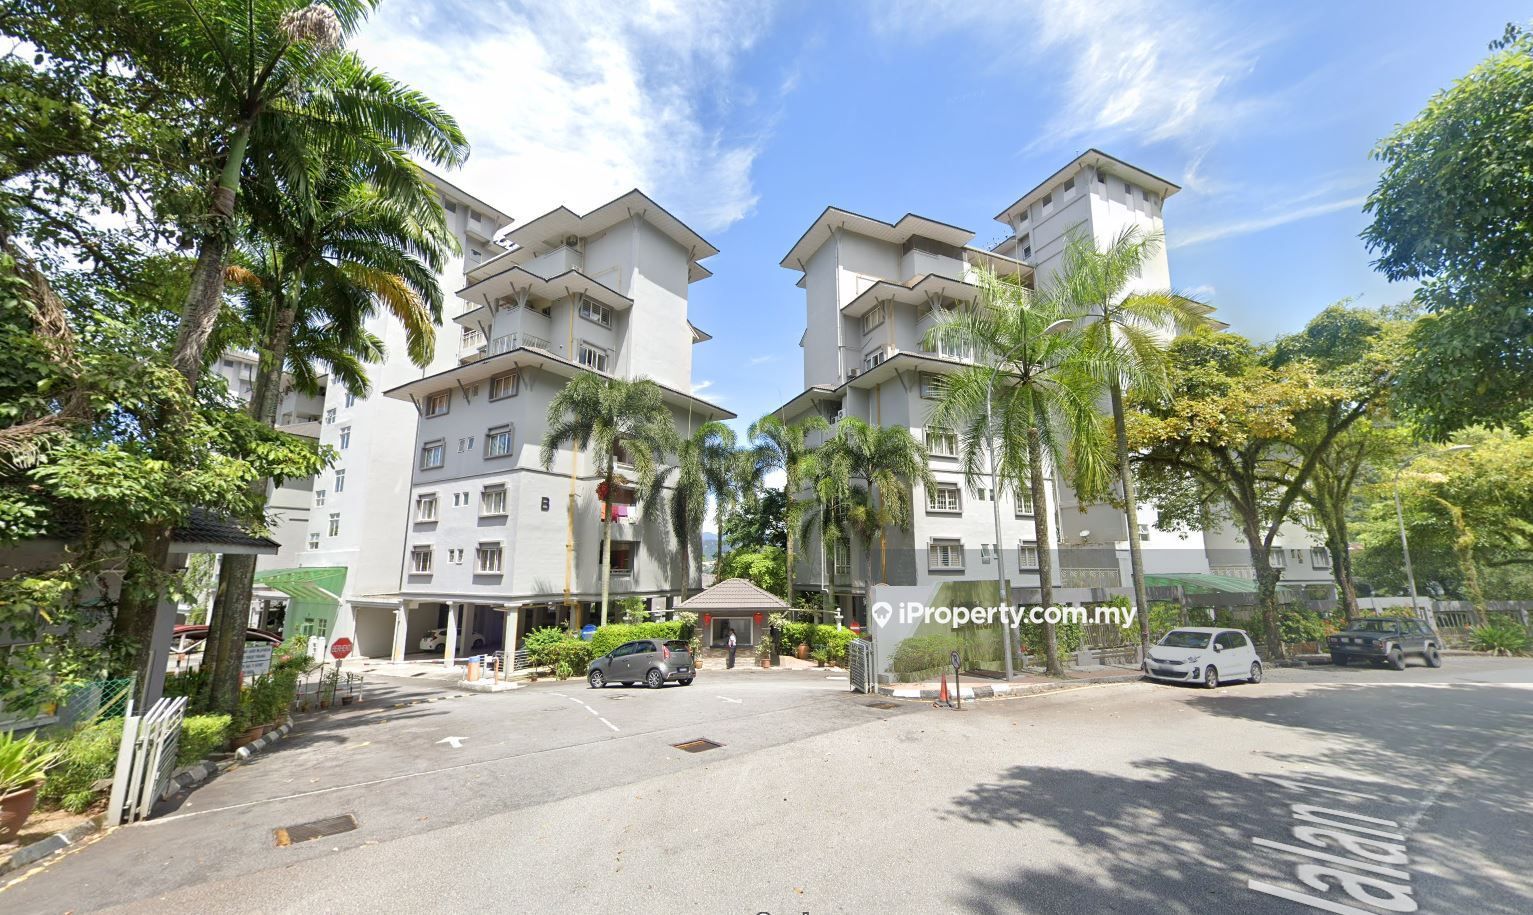 Lojing Heights 1 Intermediate Condominium 3 Bedrooms For Sale In Wangsa Maju Kuala Lumpur Iproperty Com My